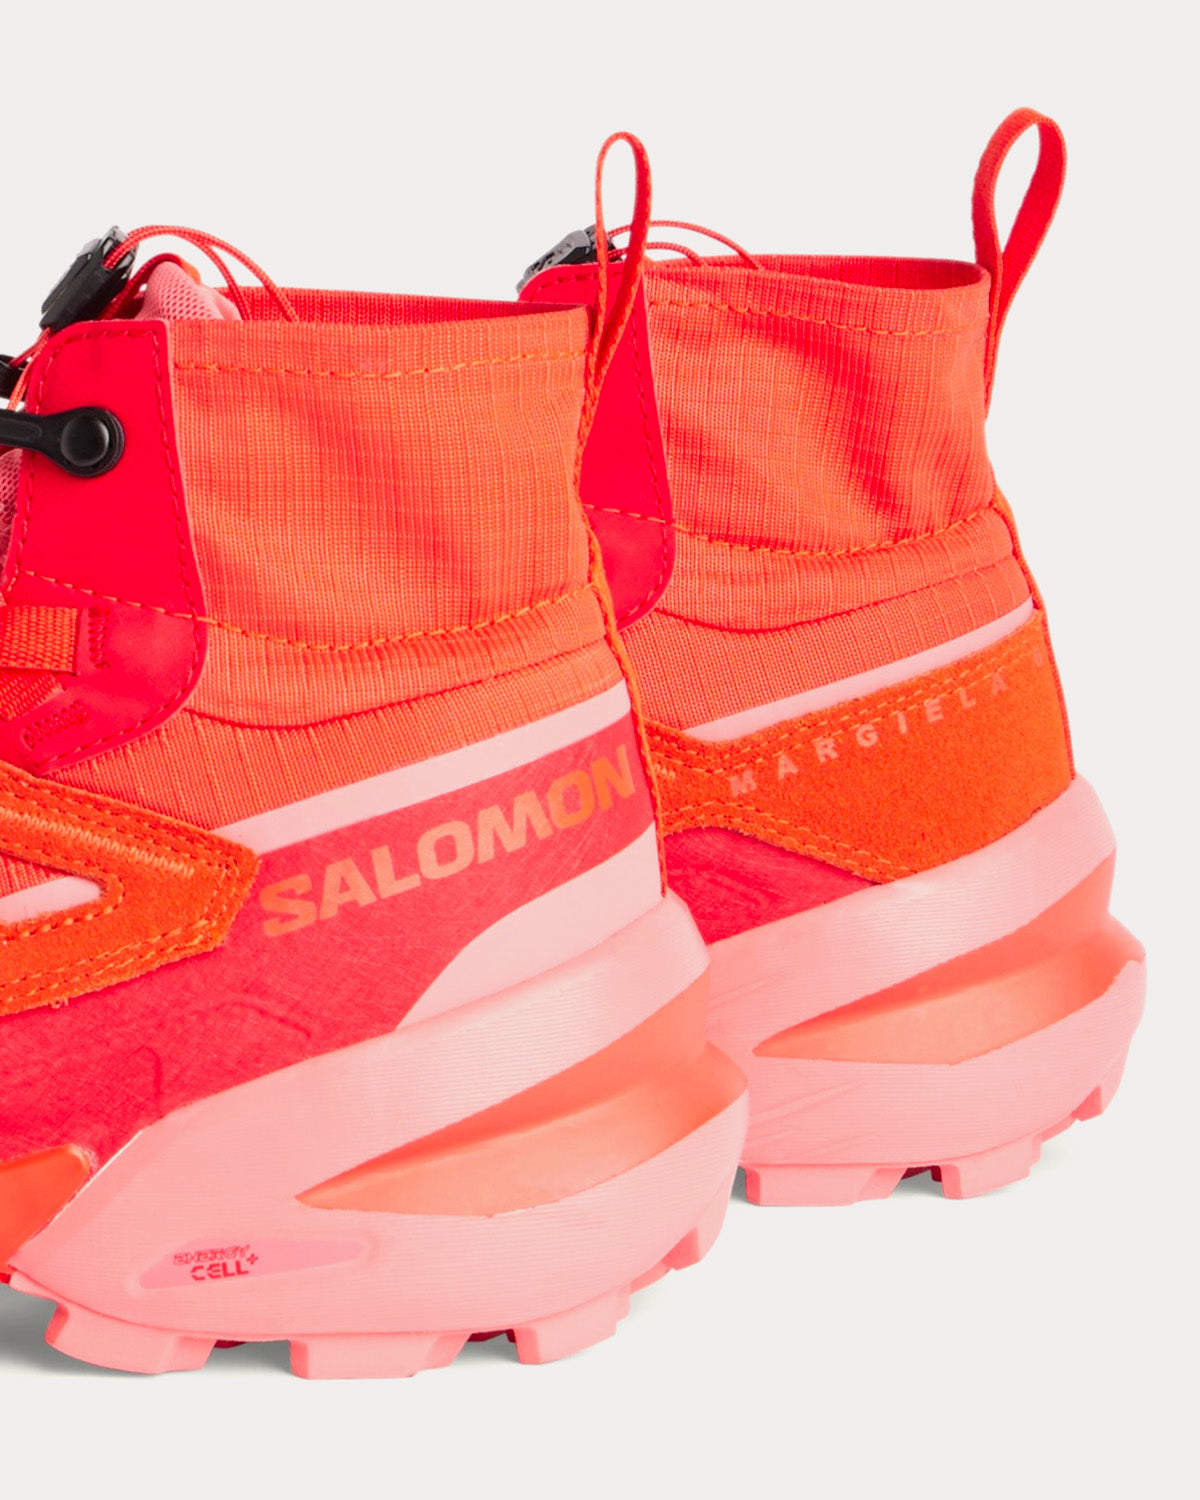 Salomon x MM6 Maison Margiela - Cross High Orange High Top Sneakers